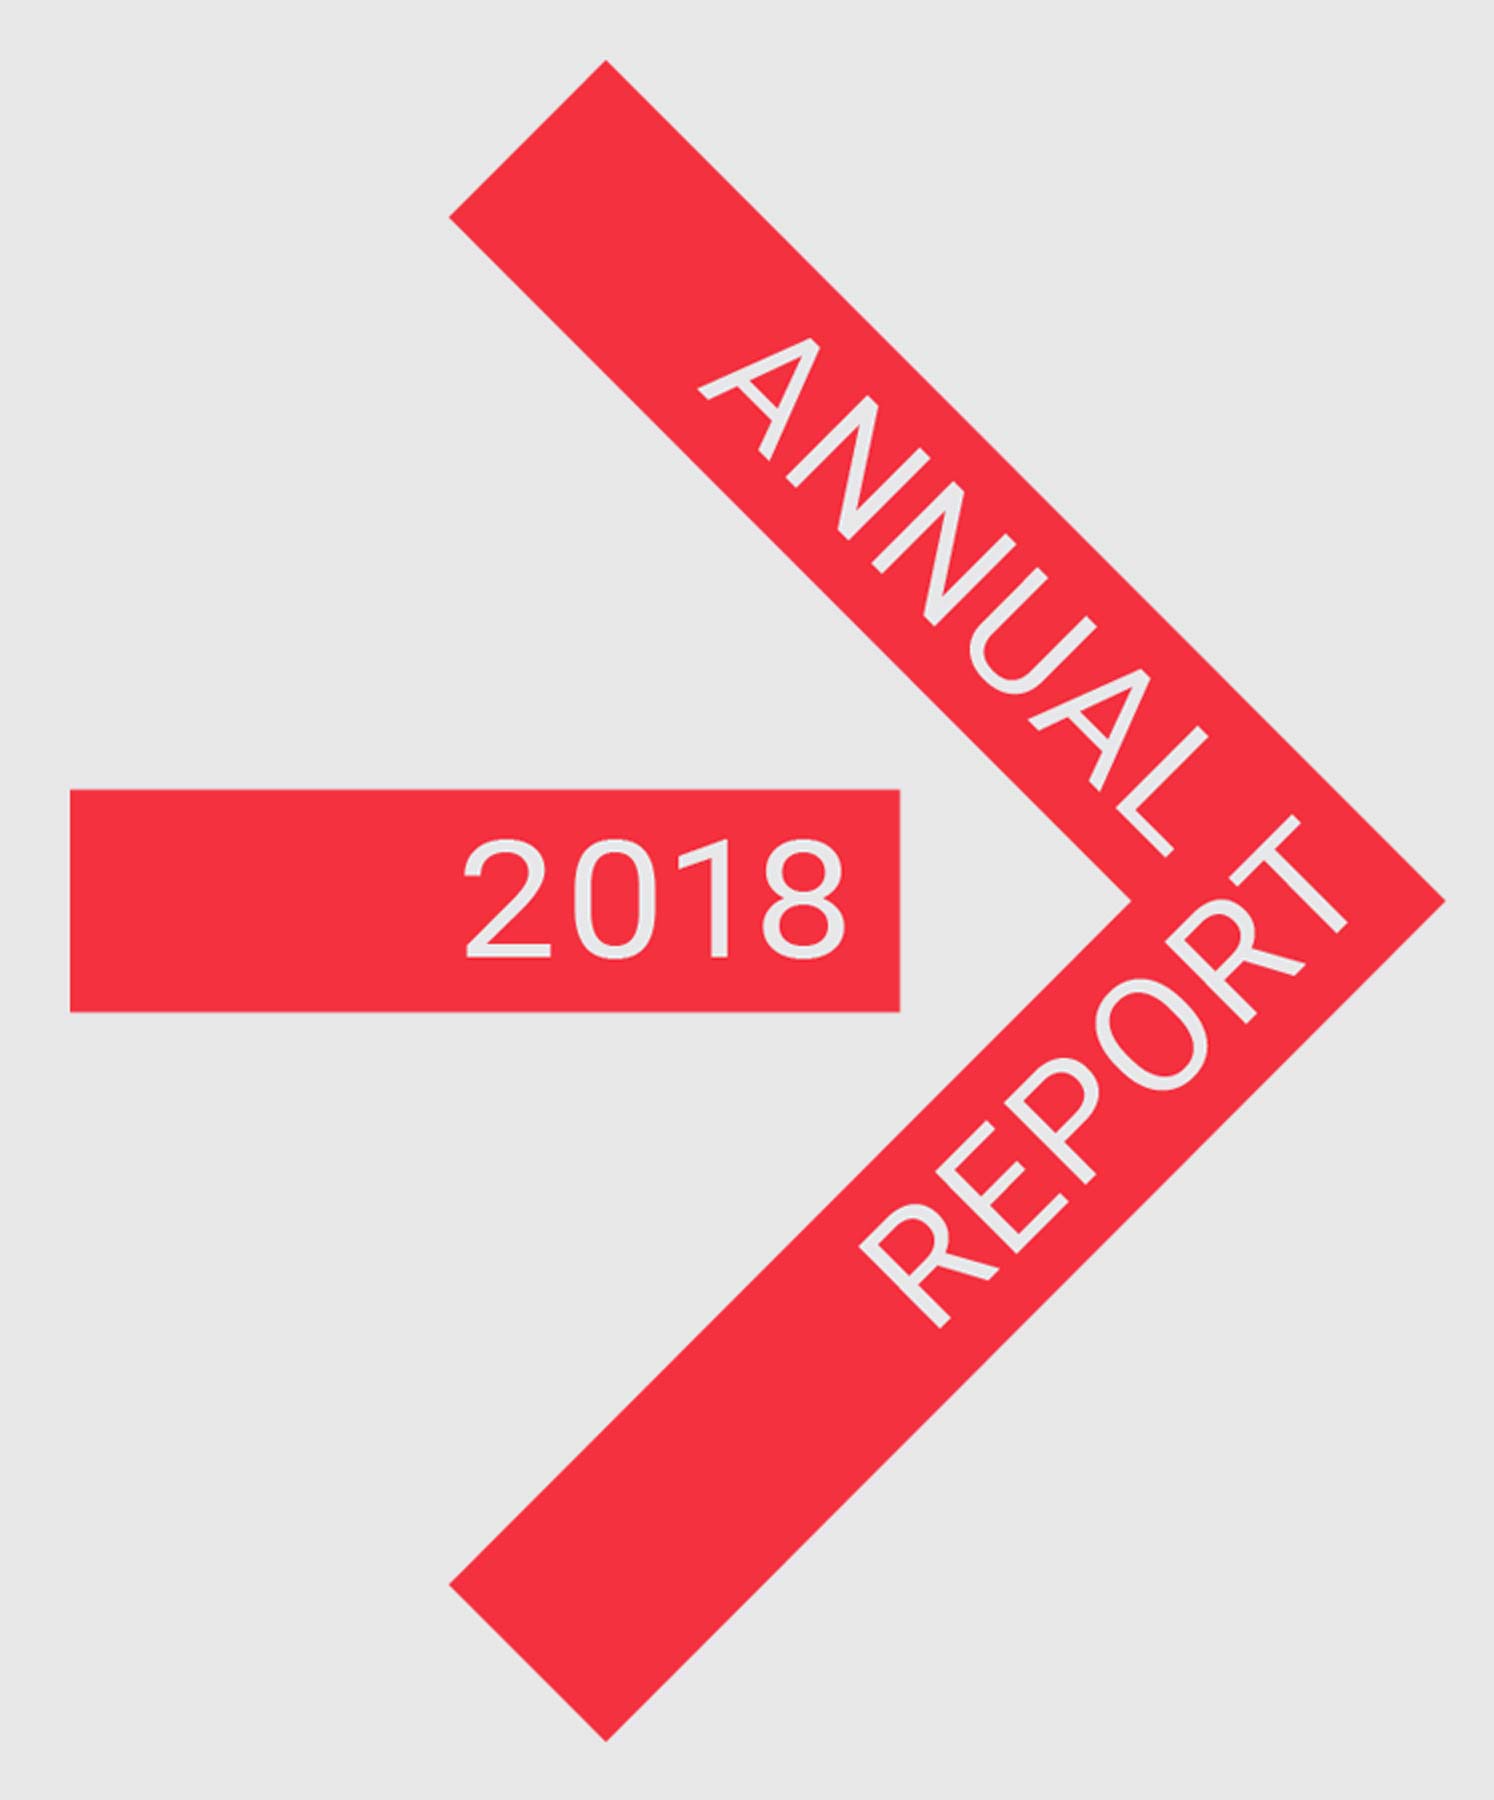 2018 annual report